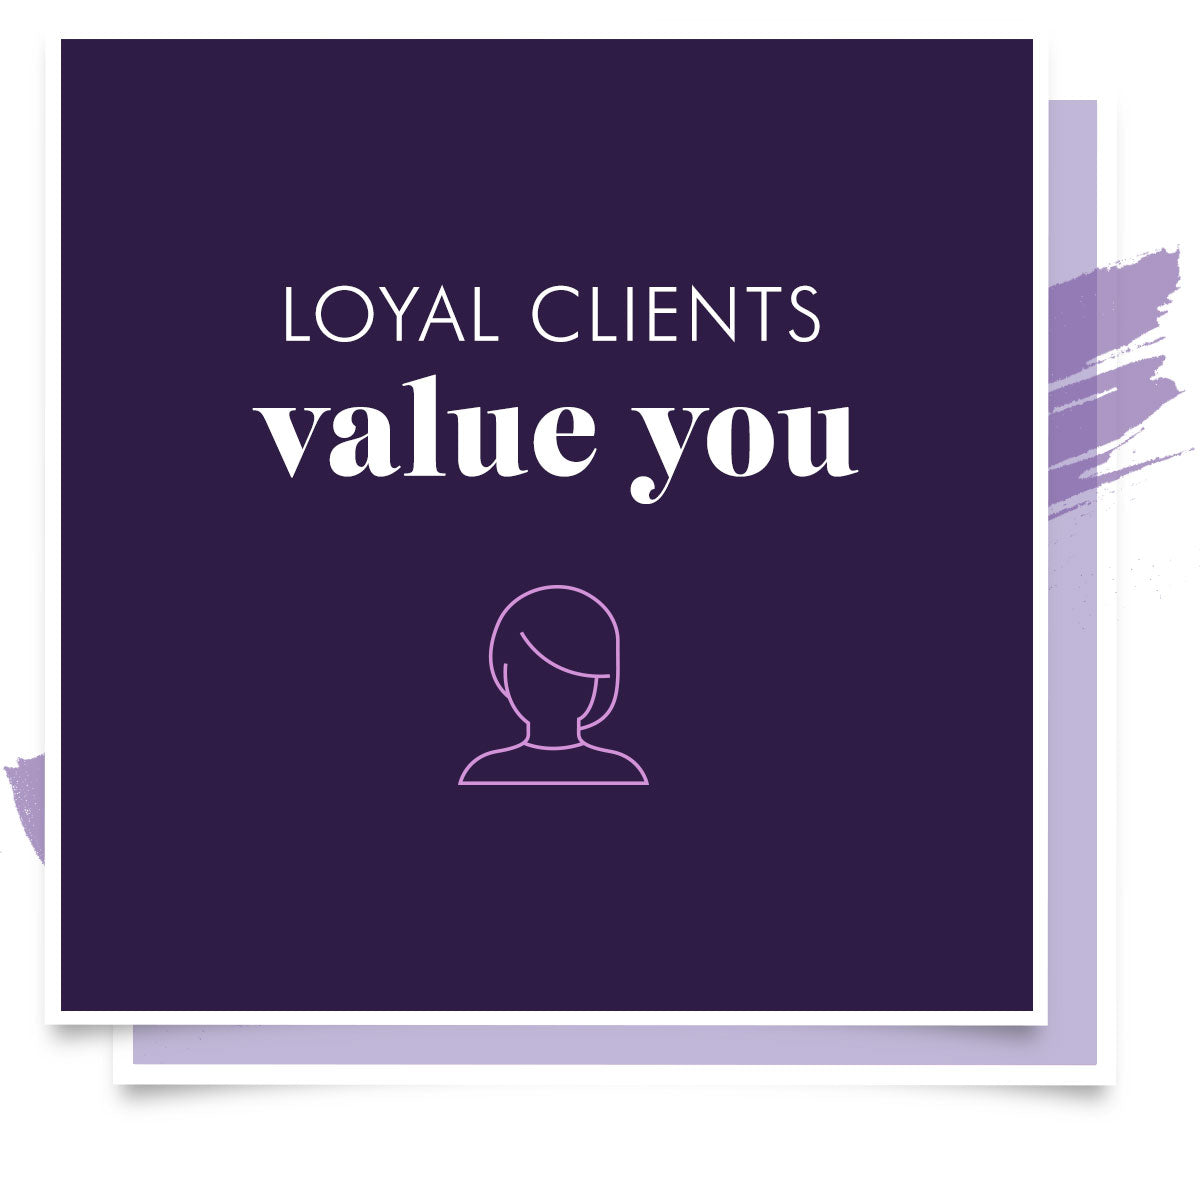 Loyal clients value you